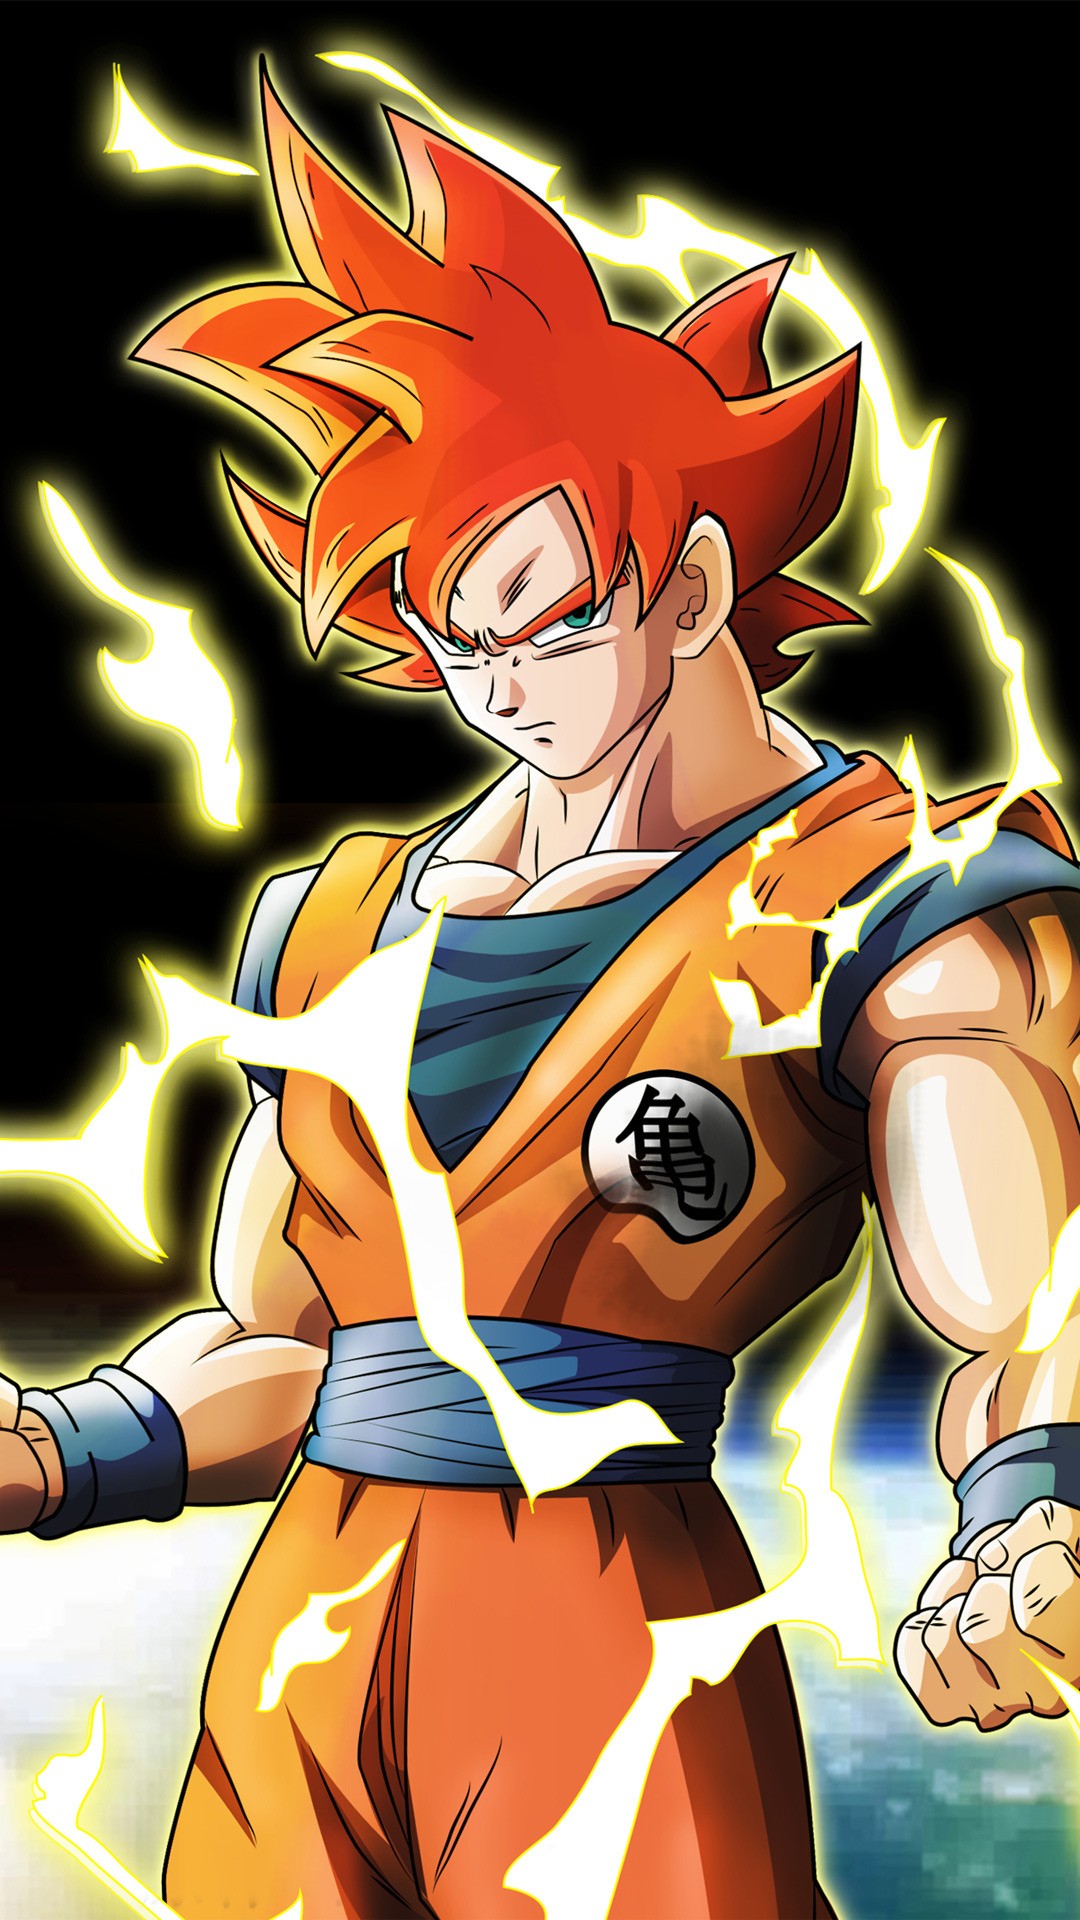 Goku Super Saiyan God Hd Wallpapers For Android 2020 Android Wallpapers